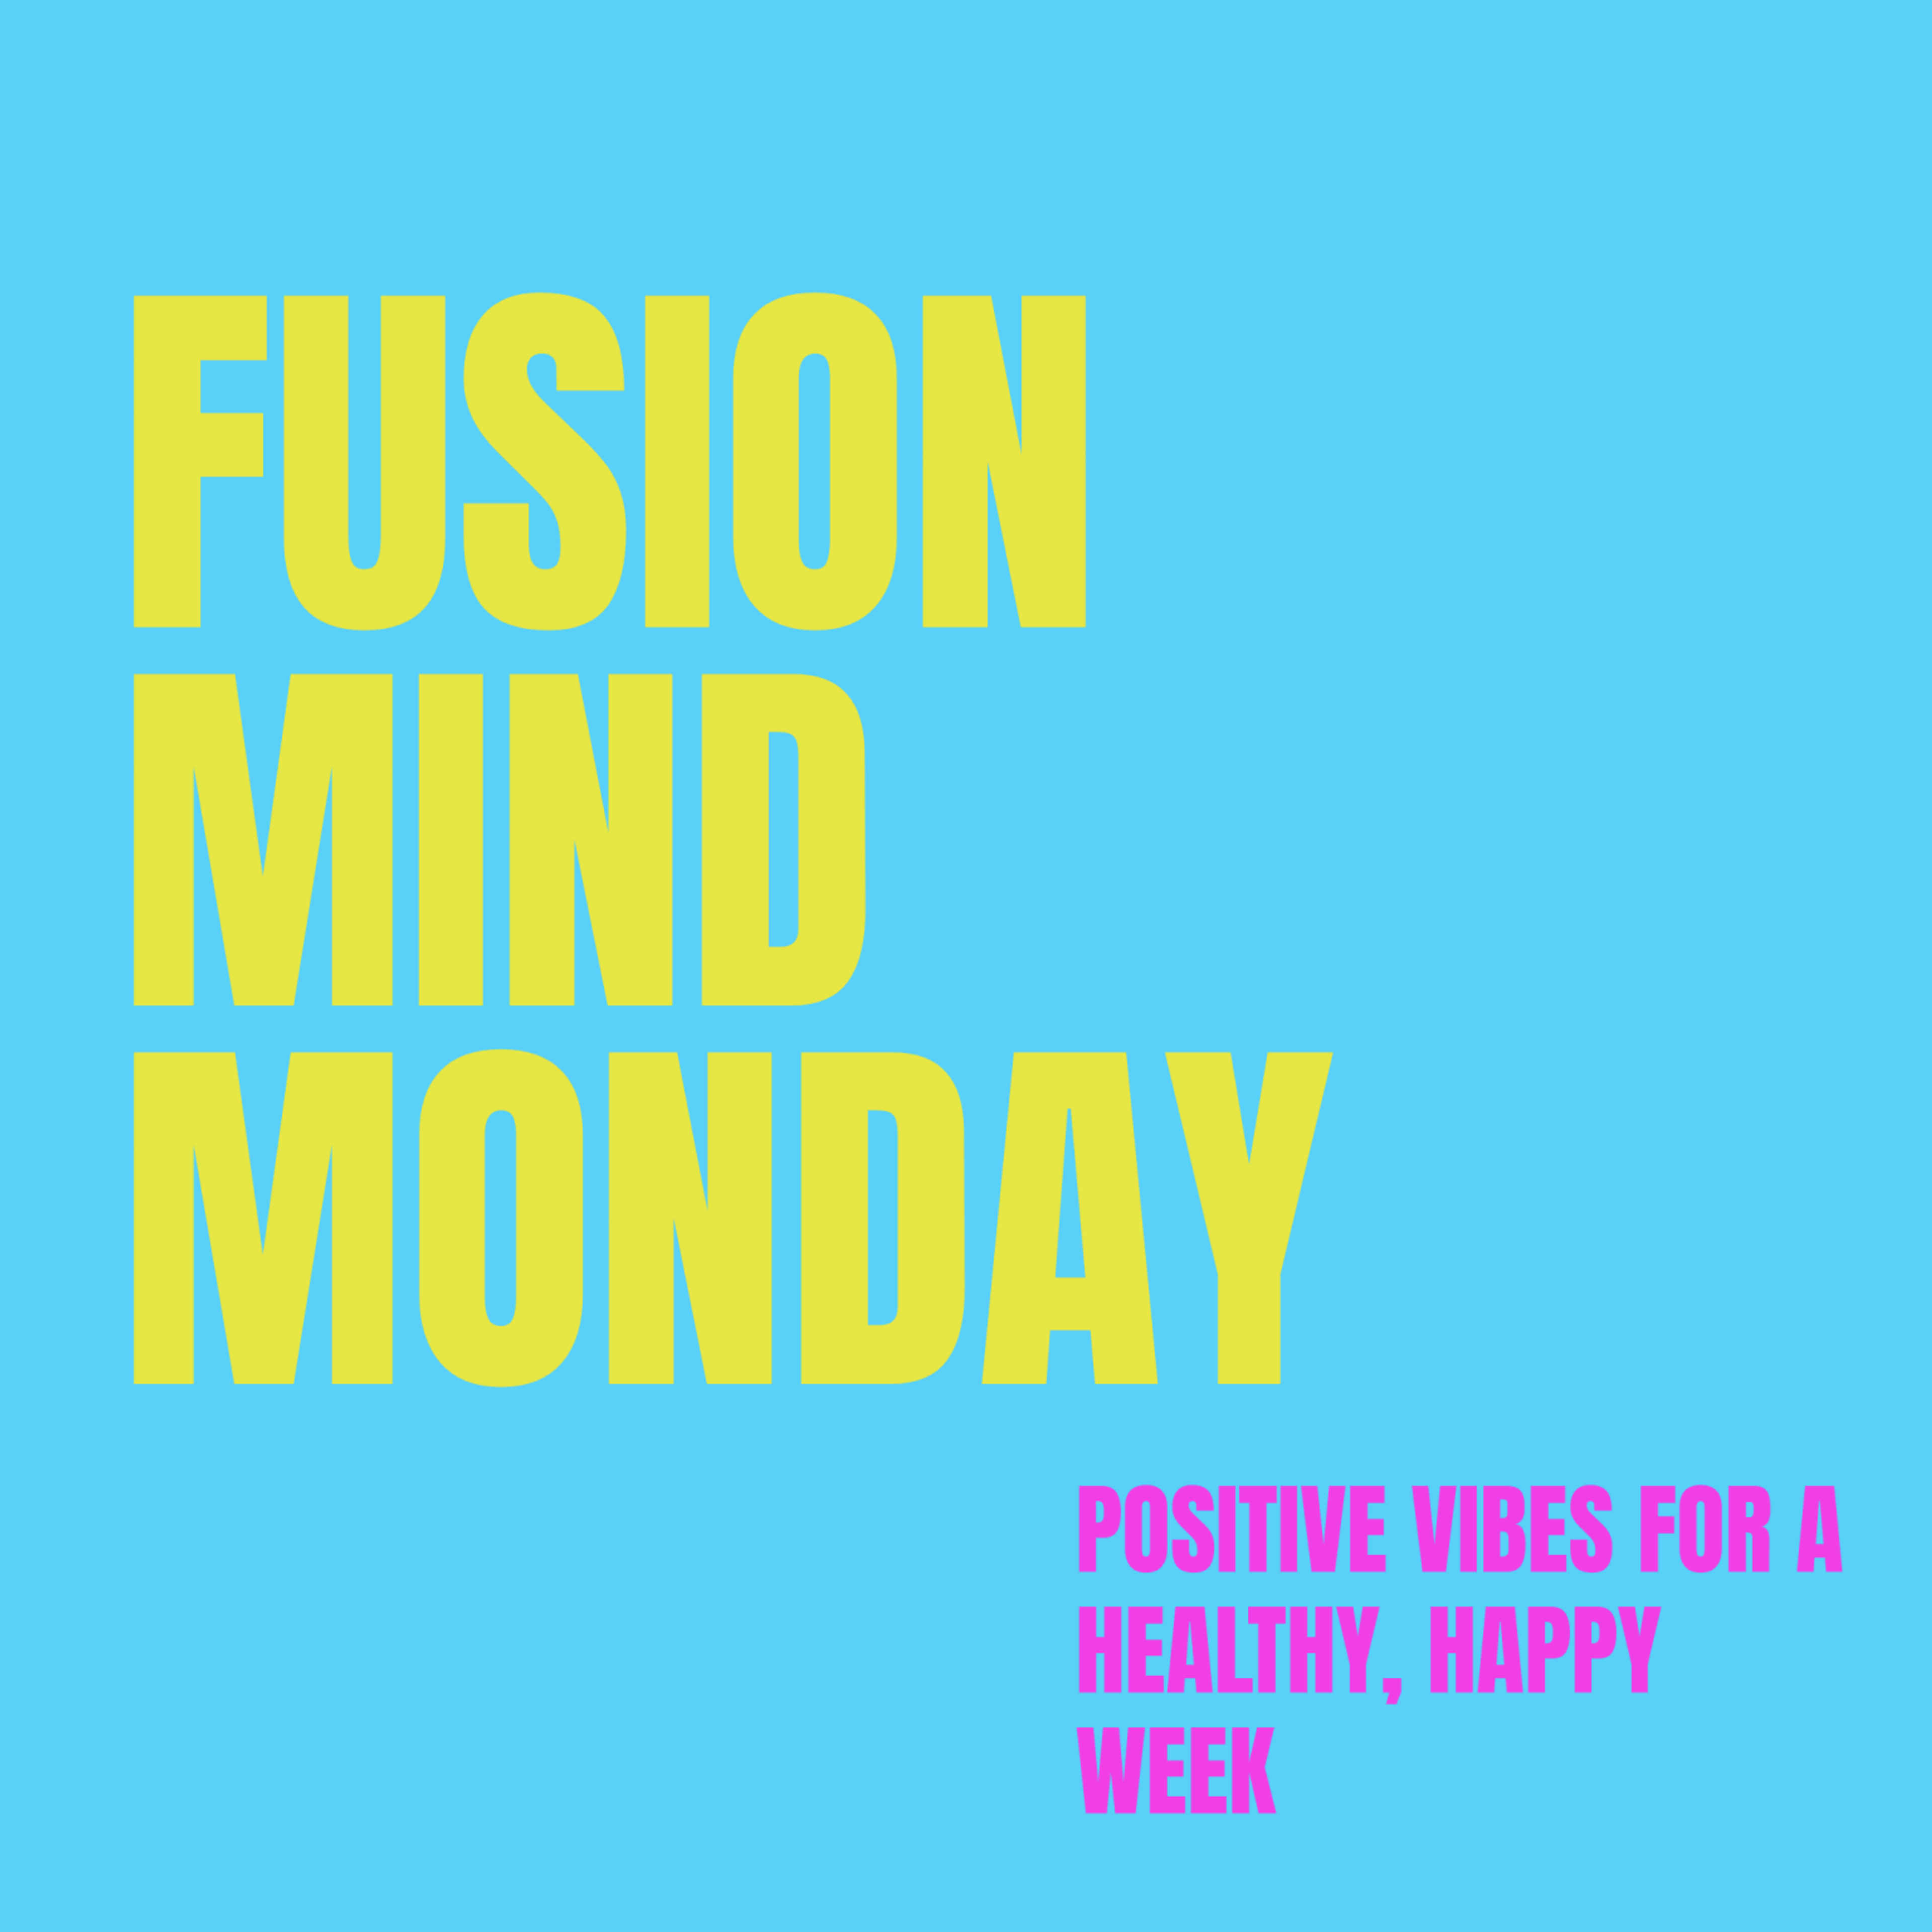 Image for blog post: Fusion Mind Monday – November 9th